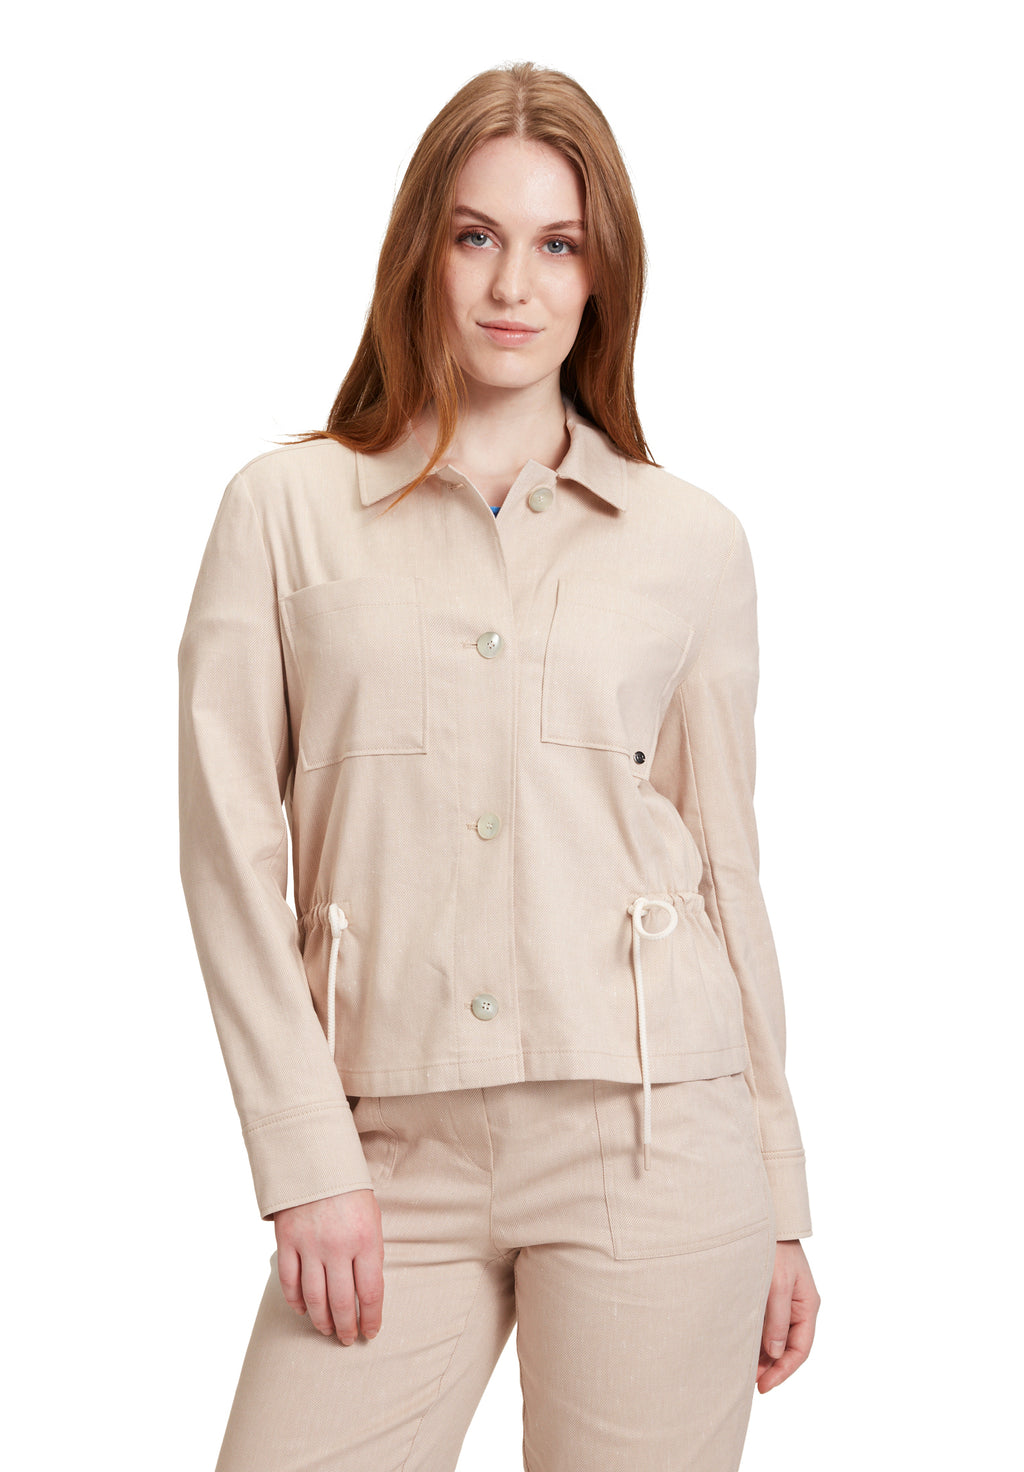 Betty & Co beige casual blazer jacket with drawstring waistline detail

Product code 4209/3351